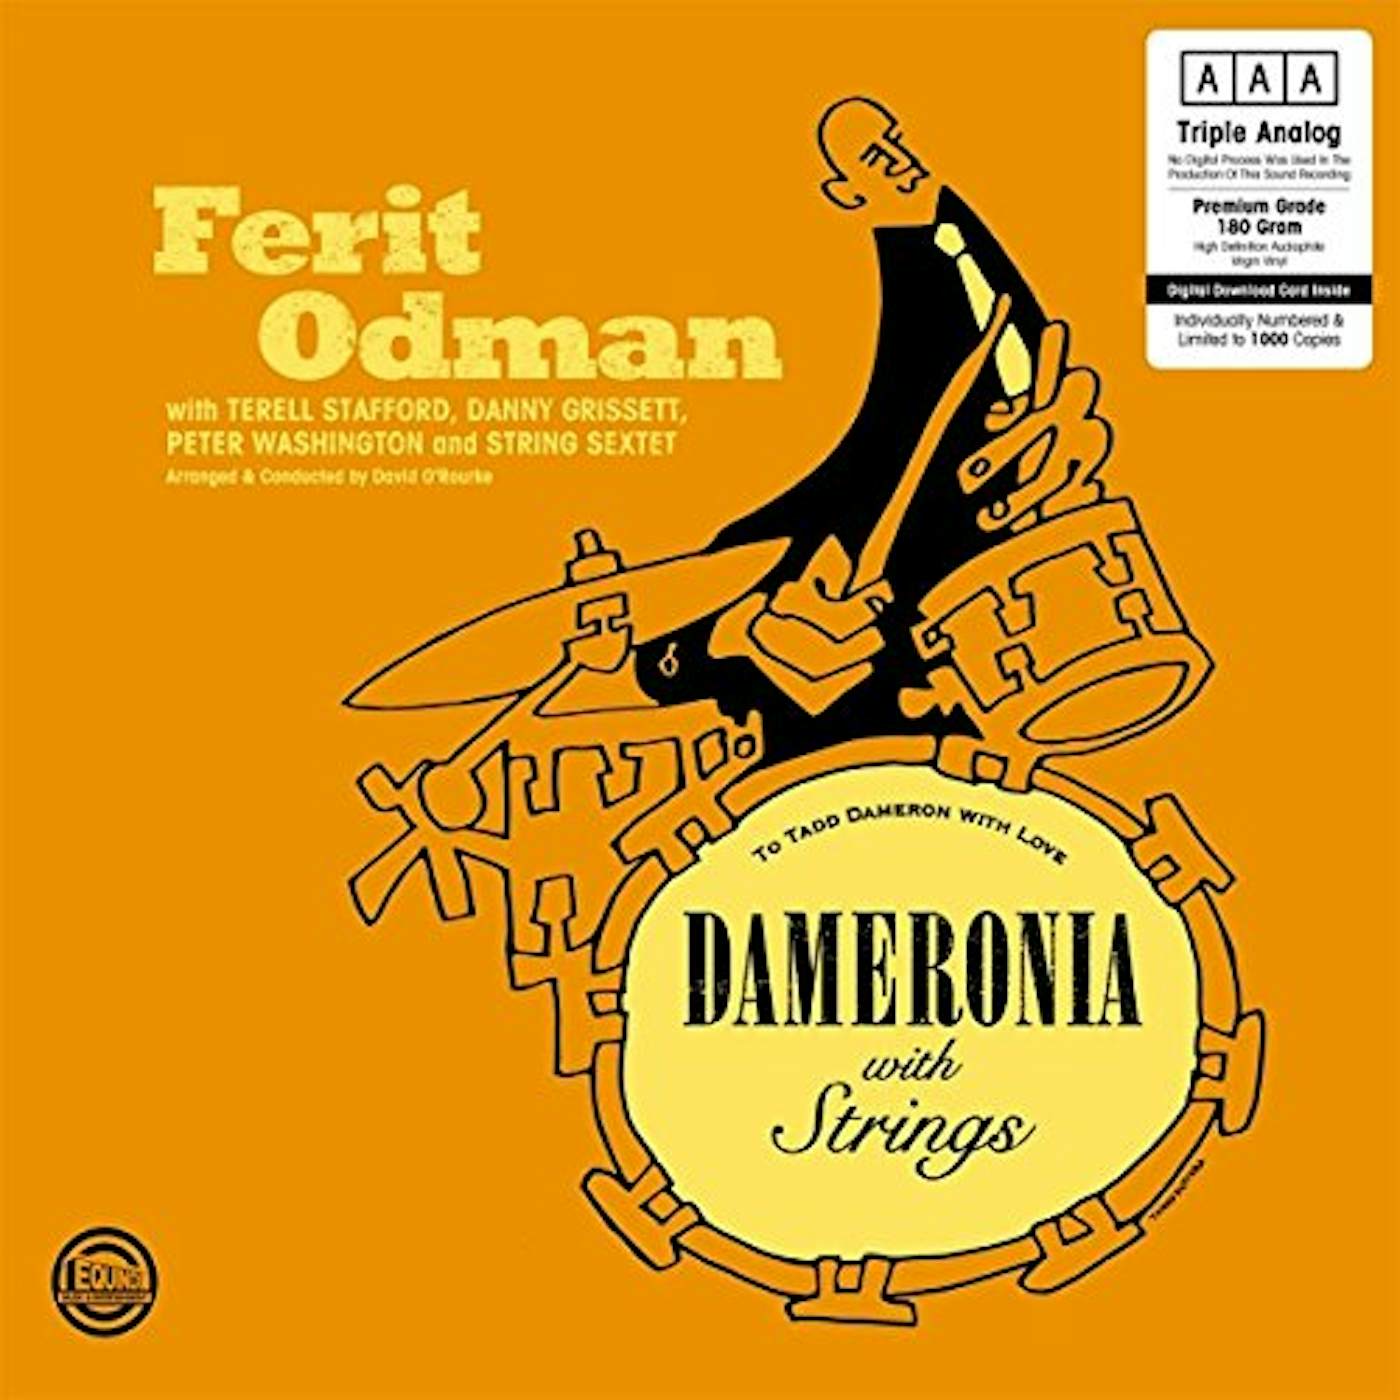 Ferit Odman Dameronia With Strings Vinyl Record